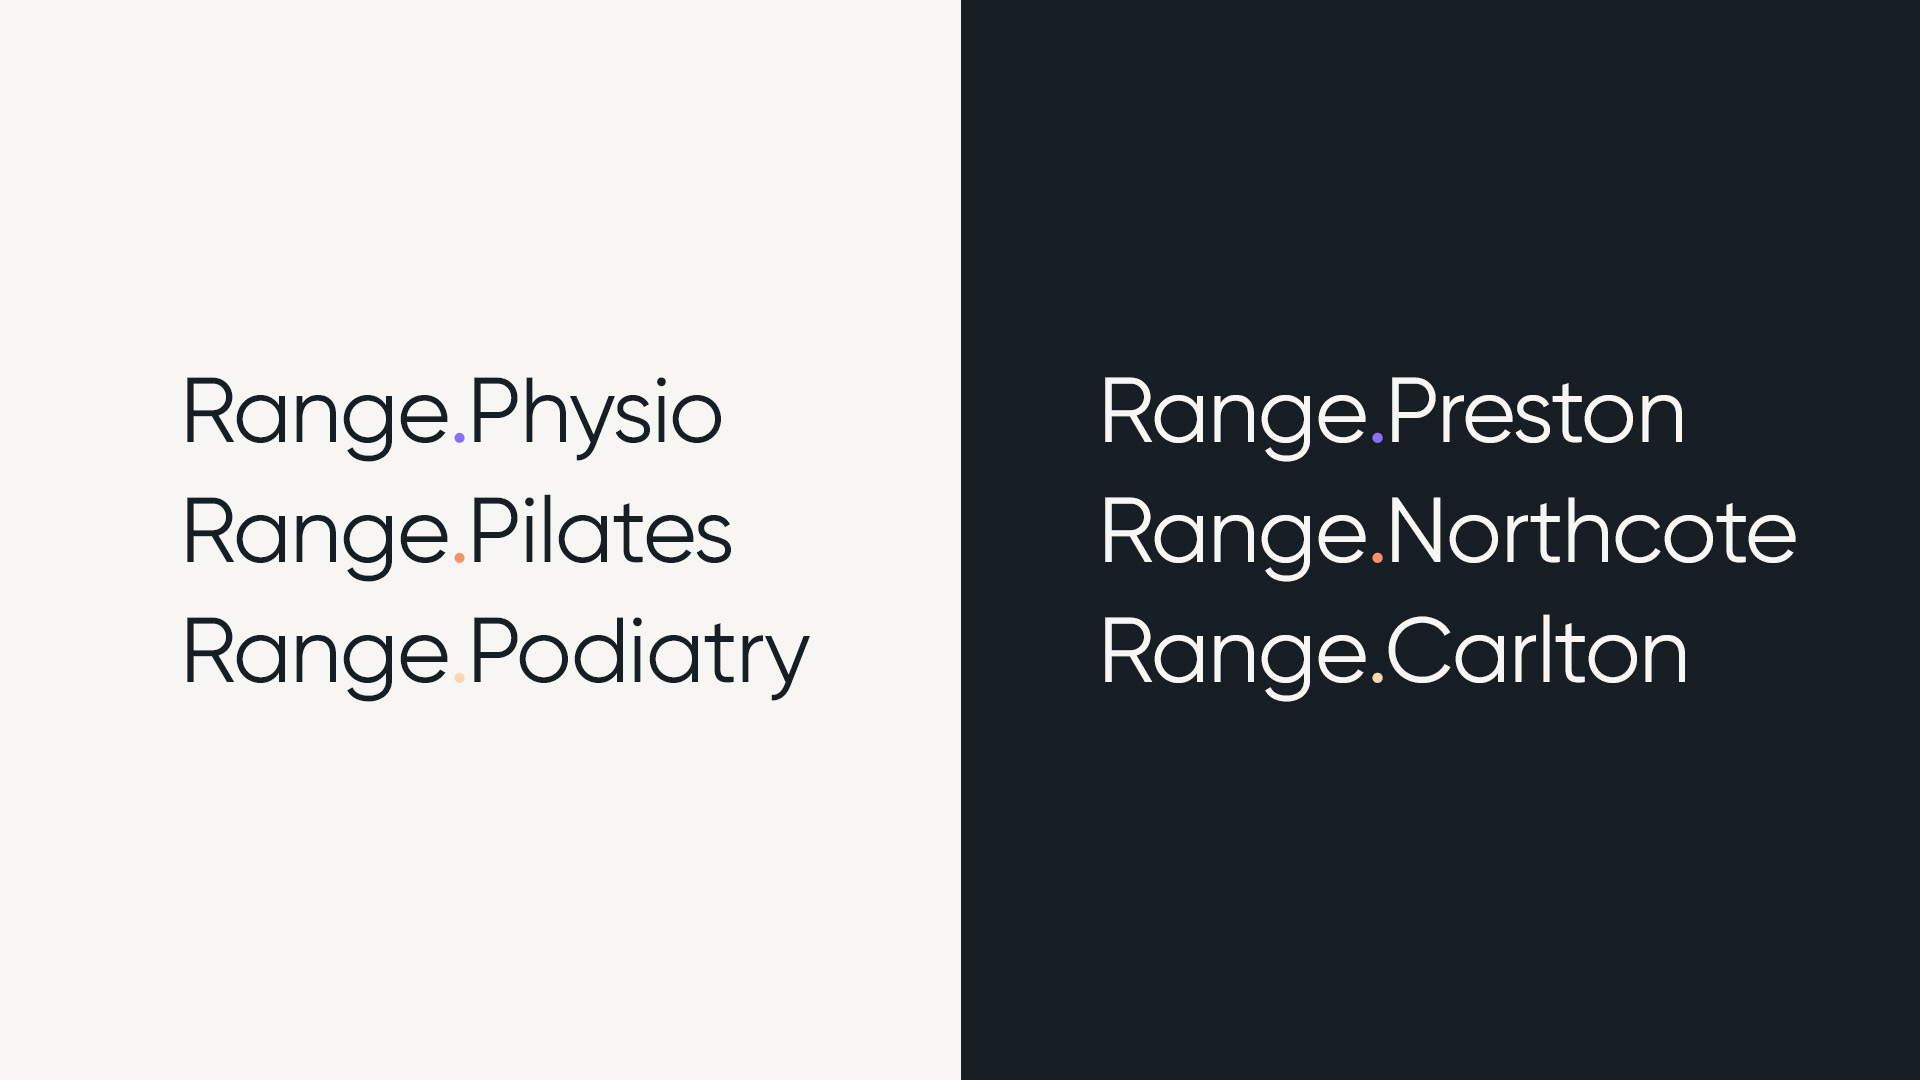 Range Physio Brand Identity Design - Branding Evolution